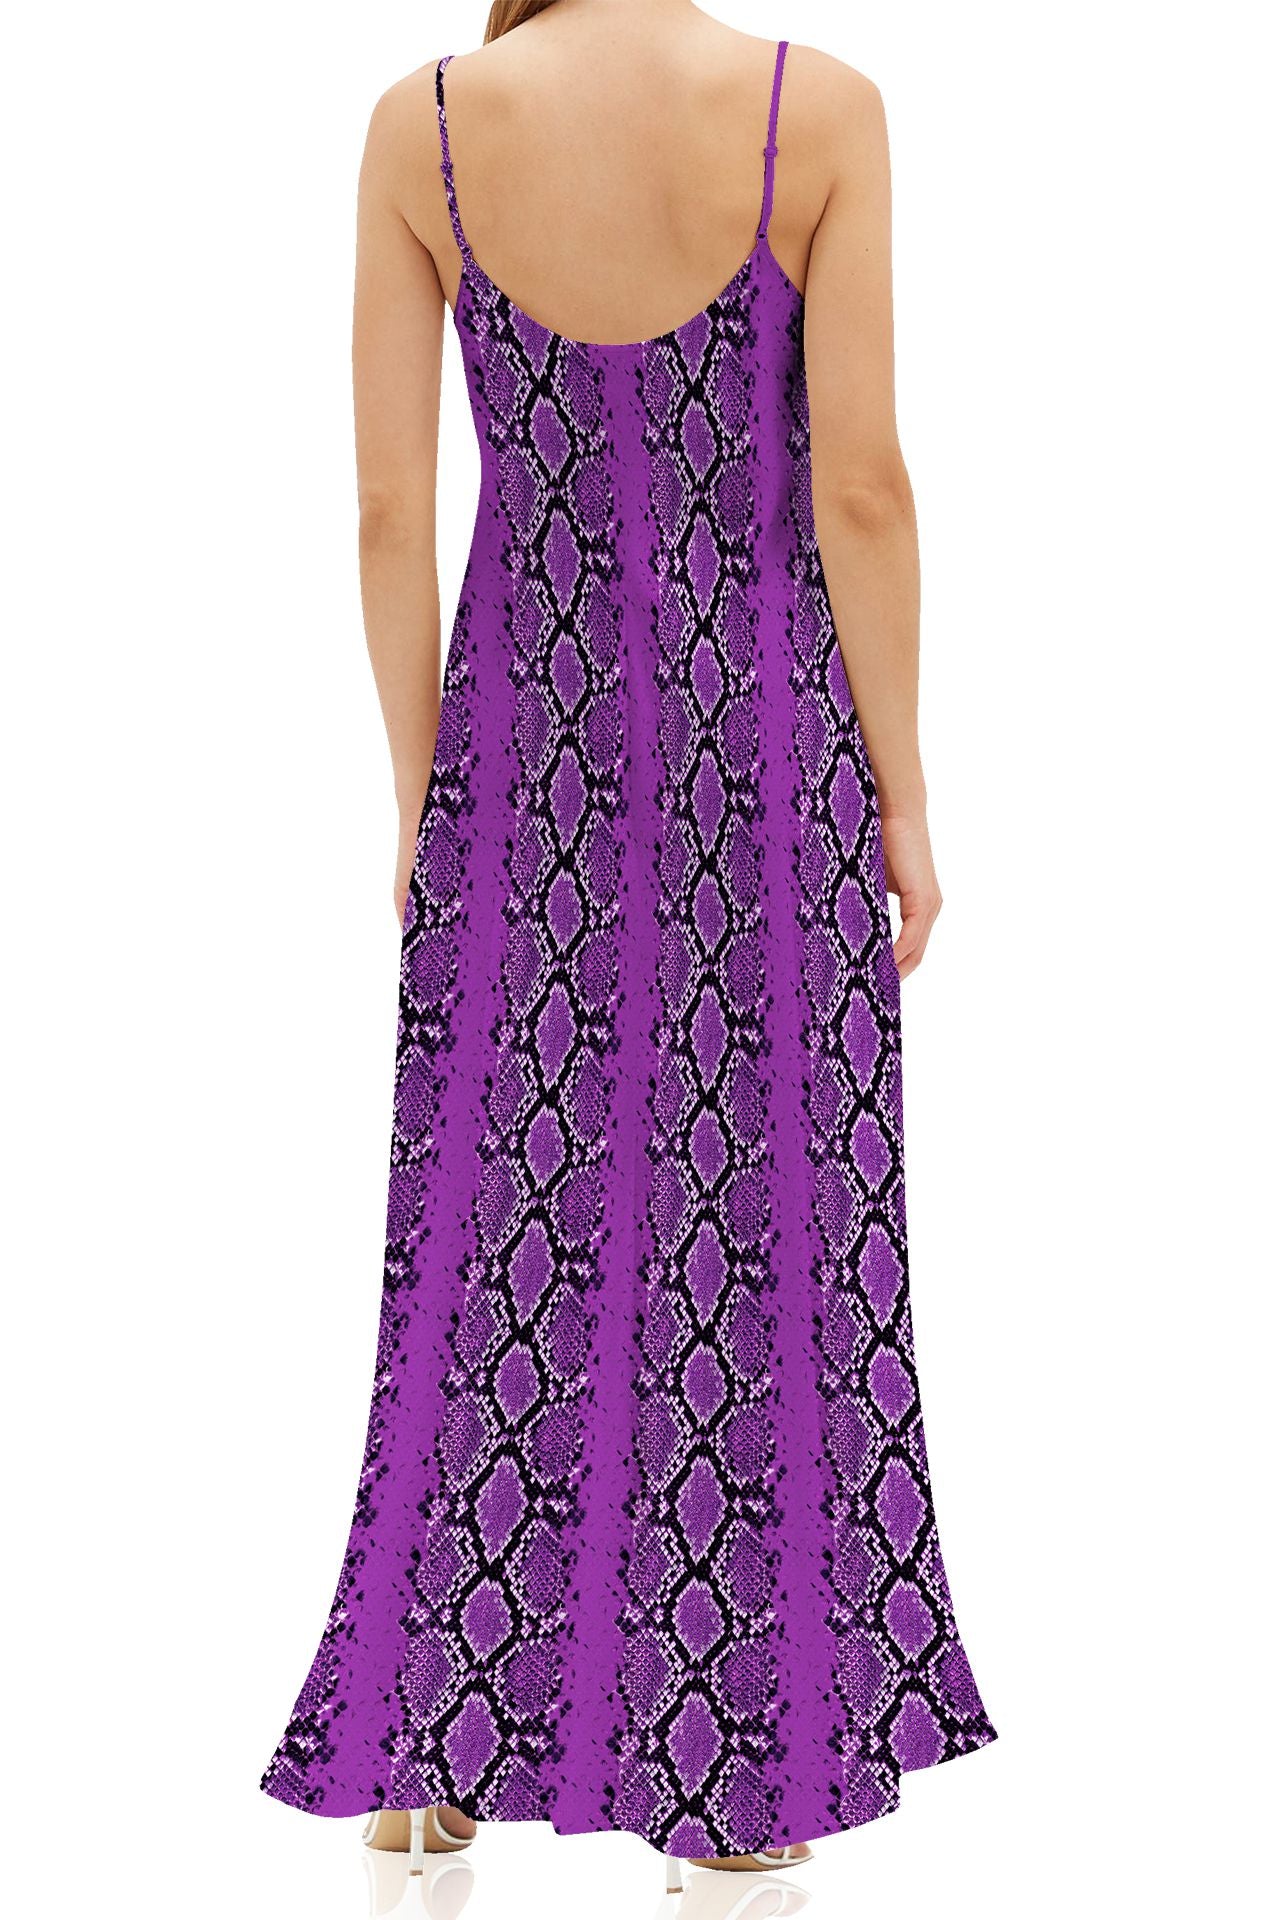 "purple maxi slip dress" "long slip dress silk" "Kyle X Shahida" "cami maxi dress"